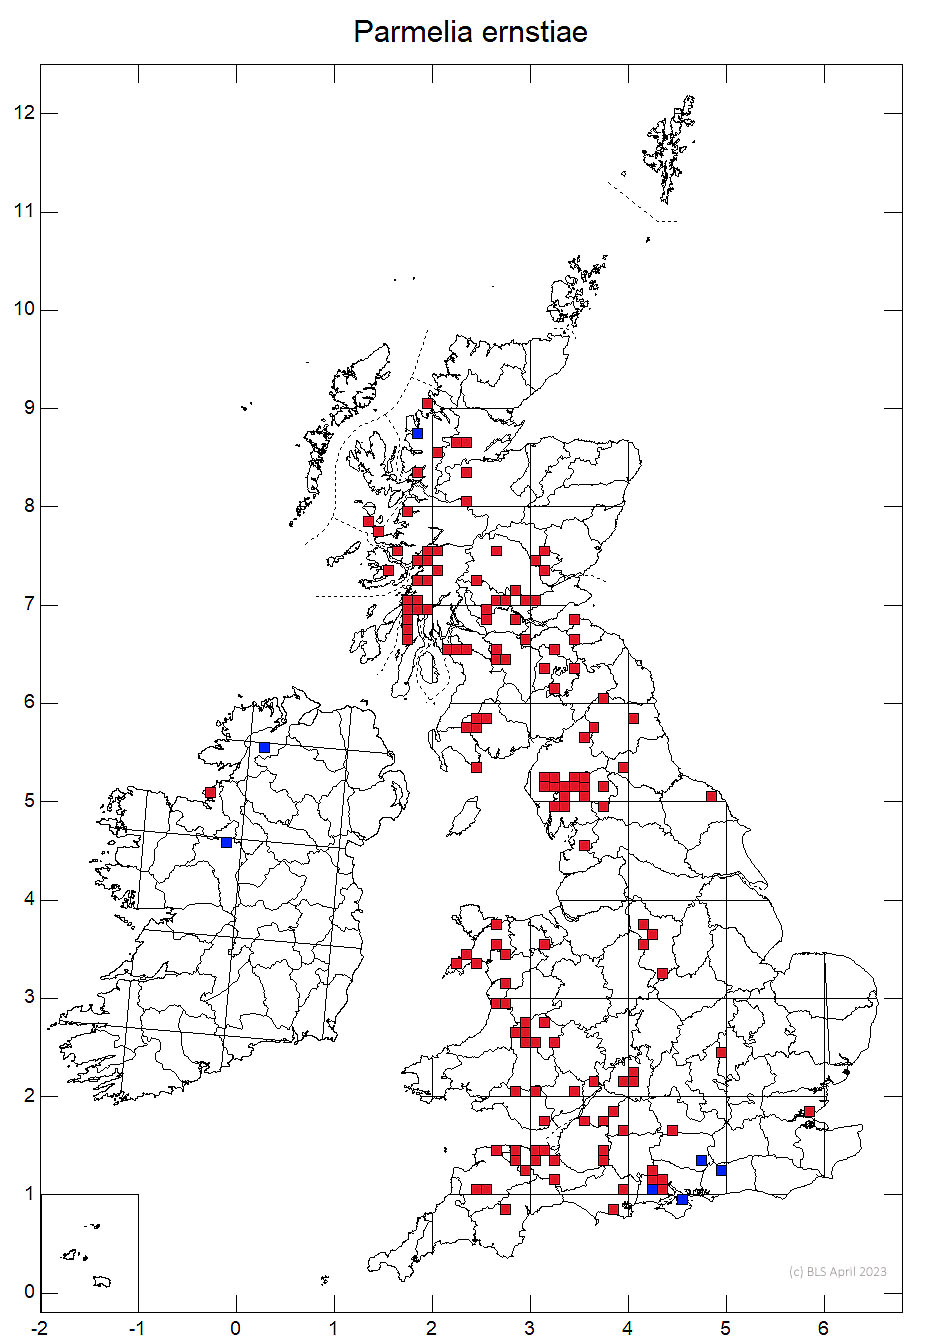 Parmelia ernstiae 10km sq distribution map